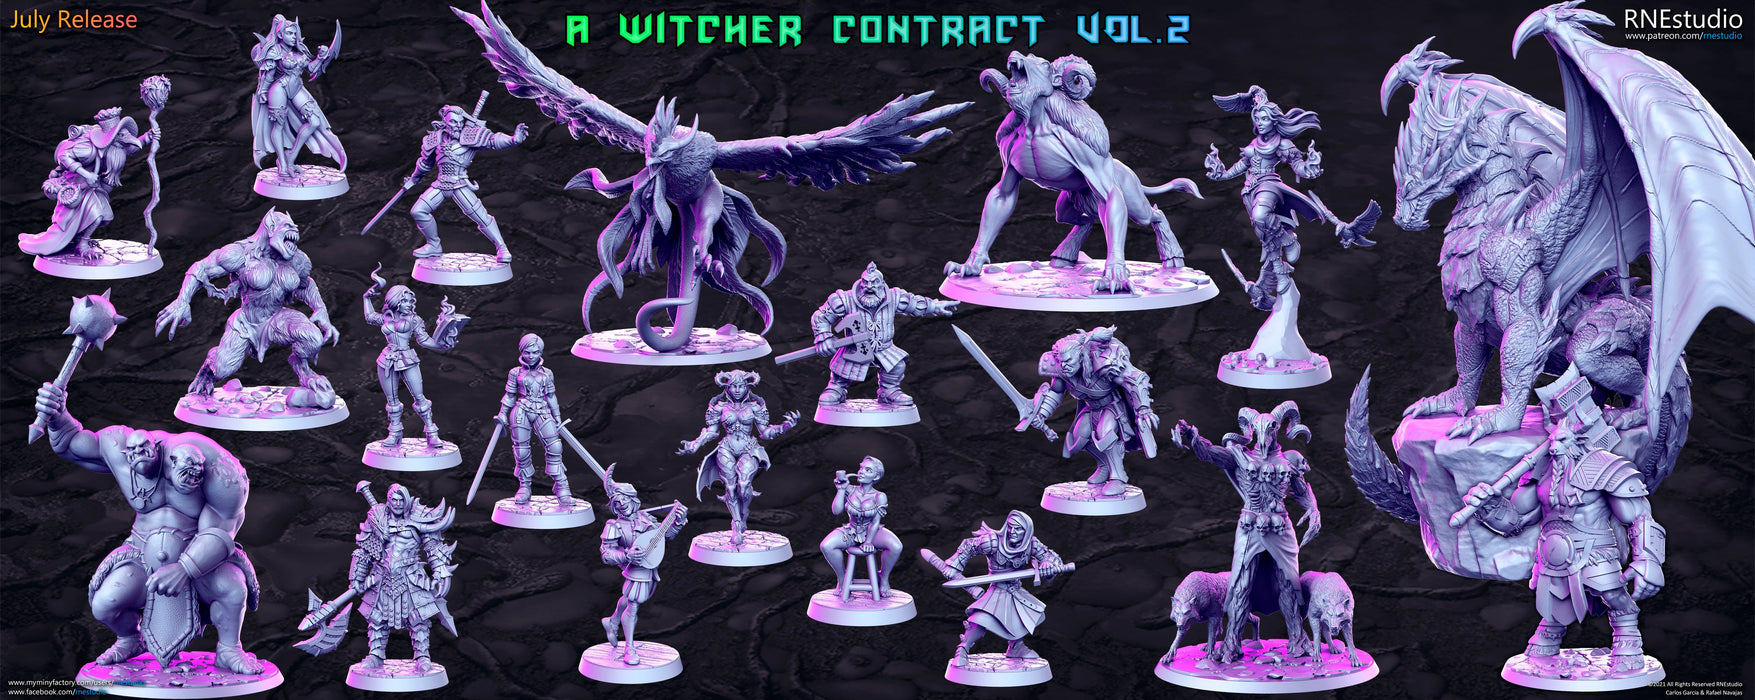 A Witcher Contract Vol 2 Miniatures (Full Set) | Fantasy Miniature | RN Estudio TabletopXtra